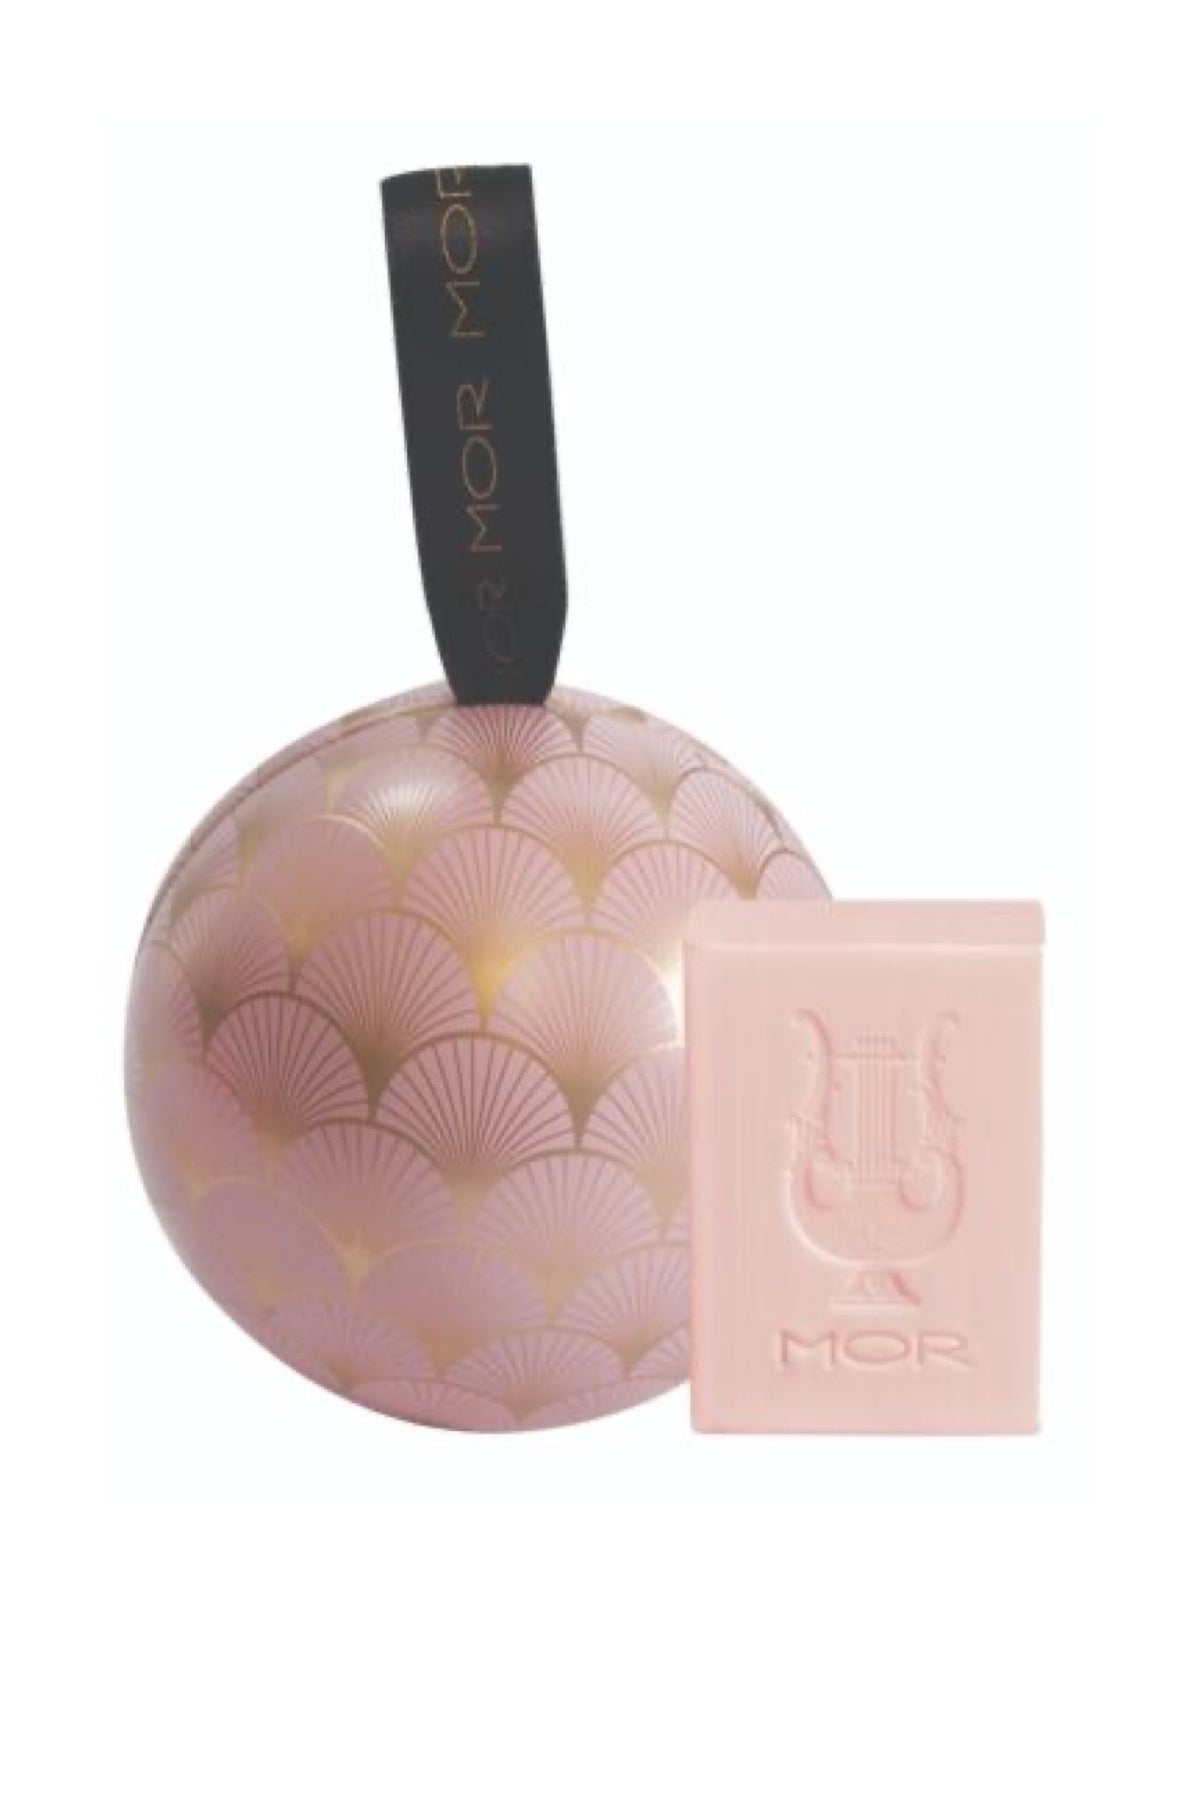 Little Luxuries Soapette - Merry Marshmallow